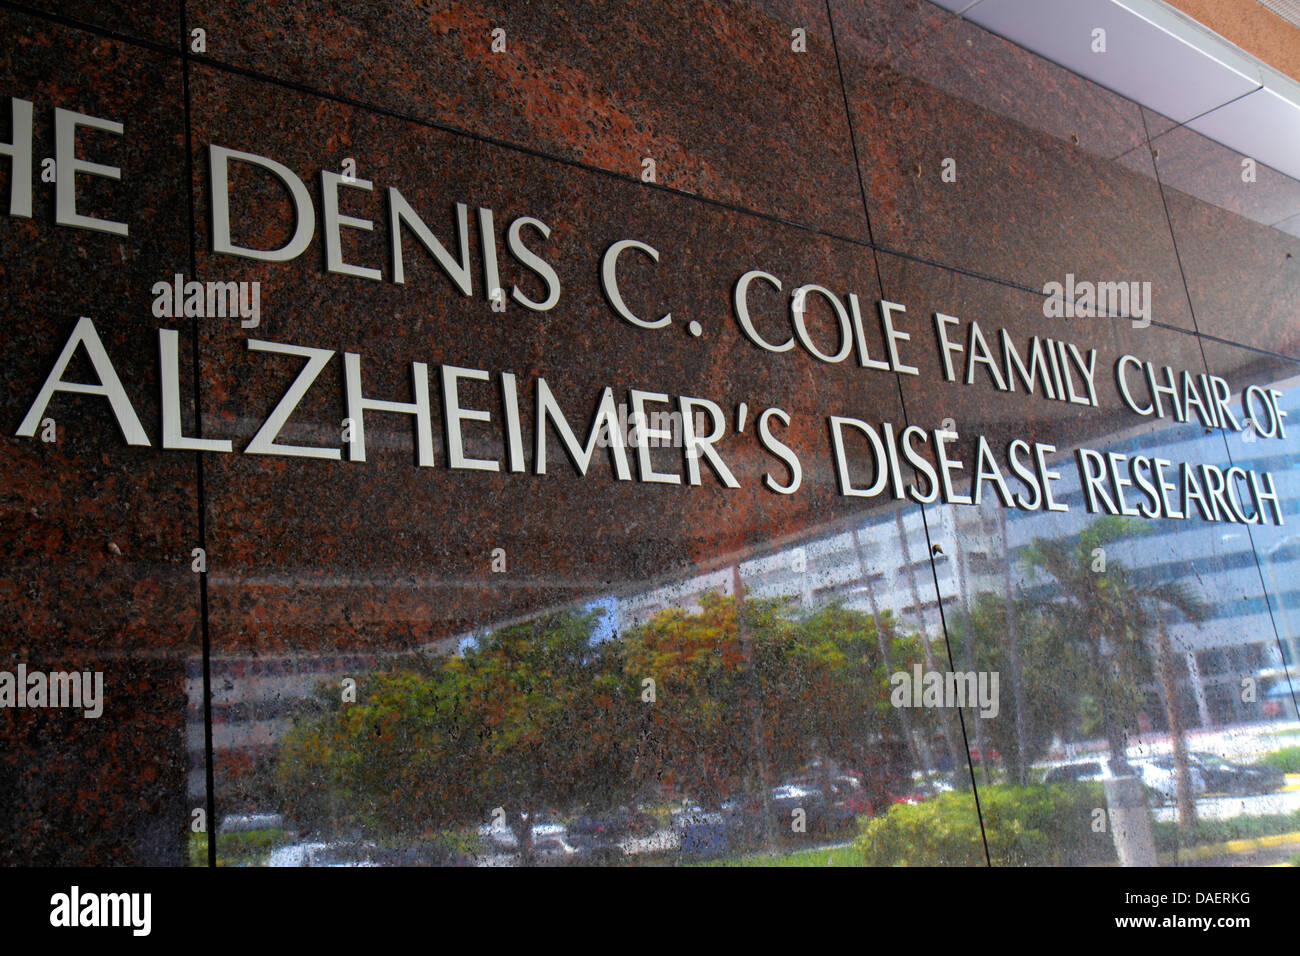 Miami Beach Florida, Mount Sinai Medical Center, ospedale, Alzheimer's Disease Research, FL130518004 Foto Stock